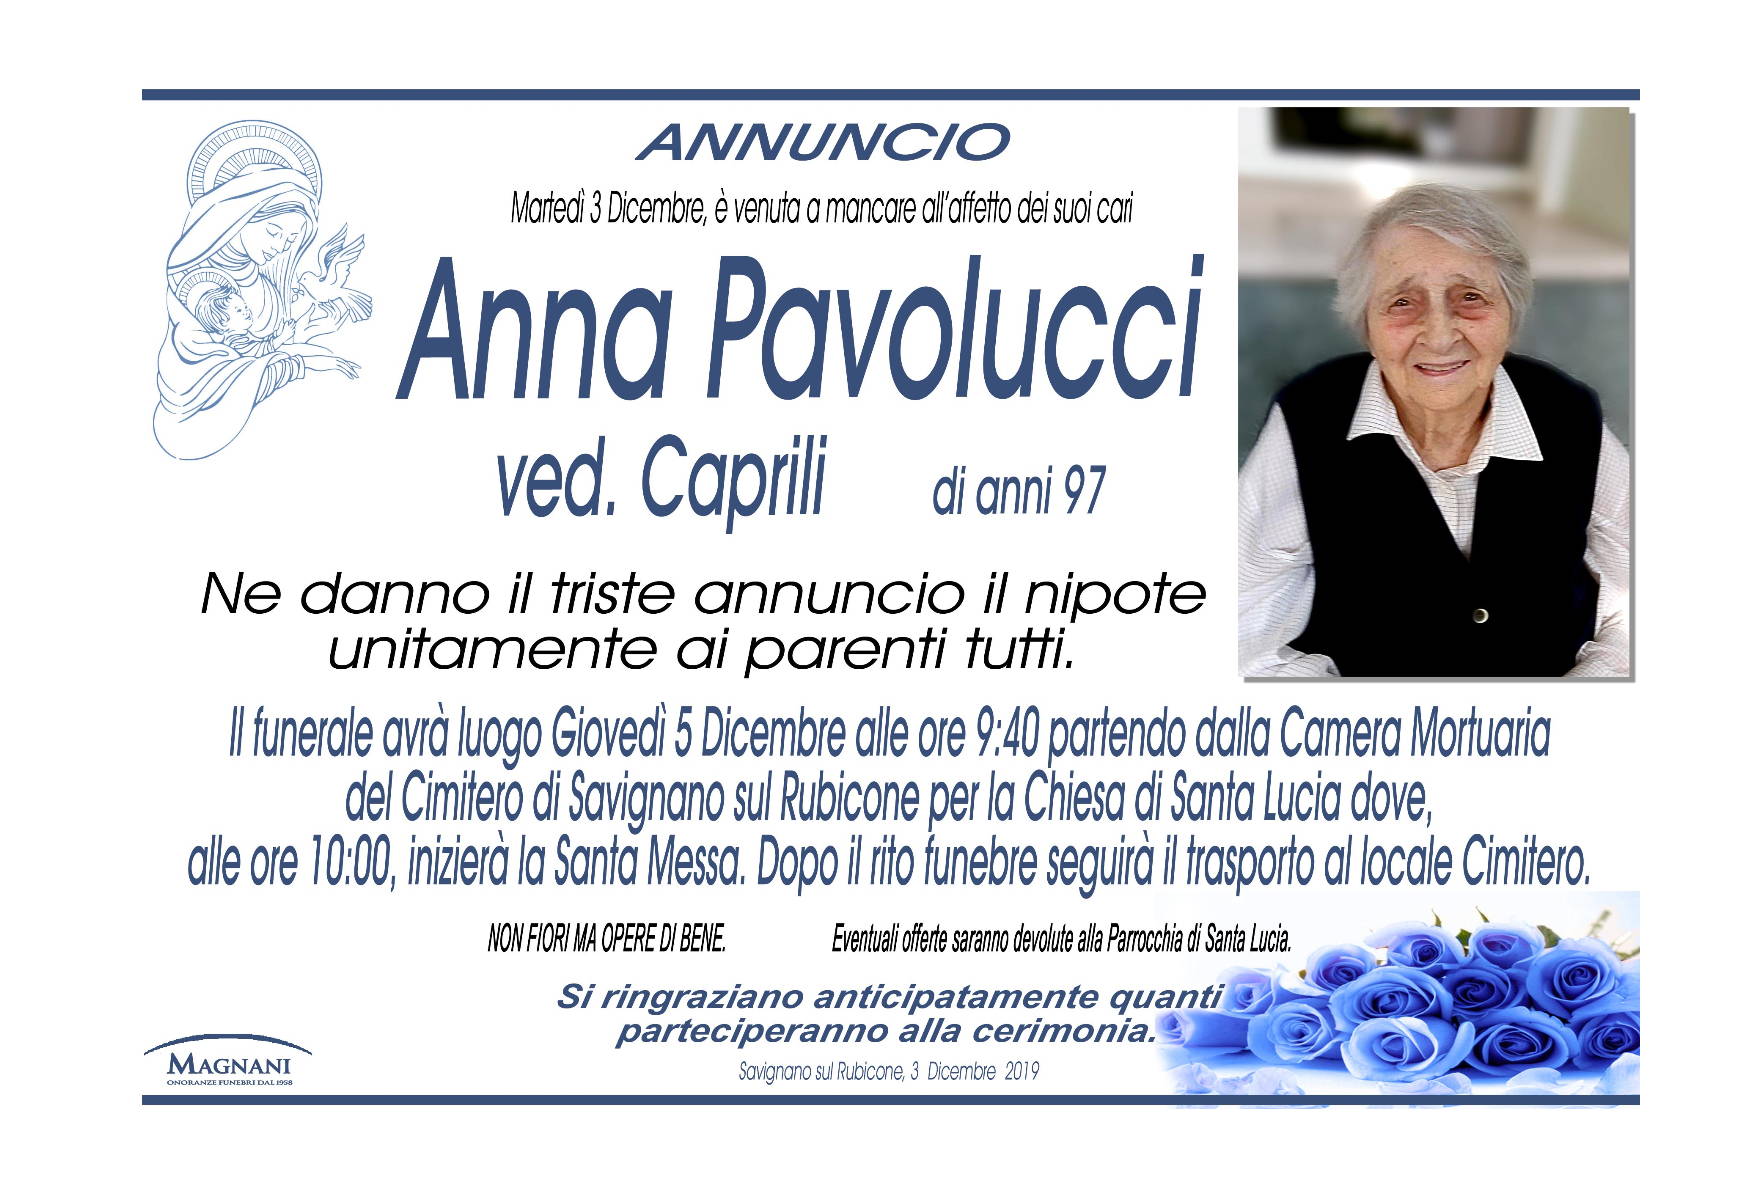 Anna Pavolucci